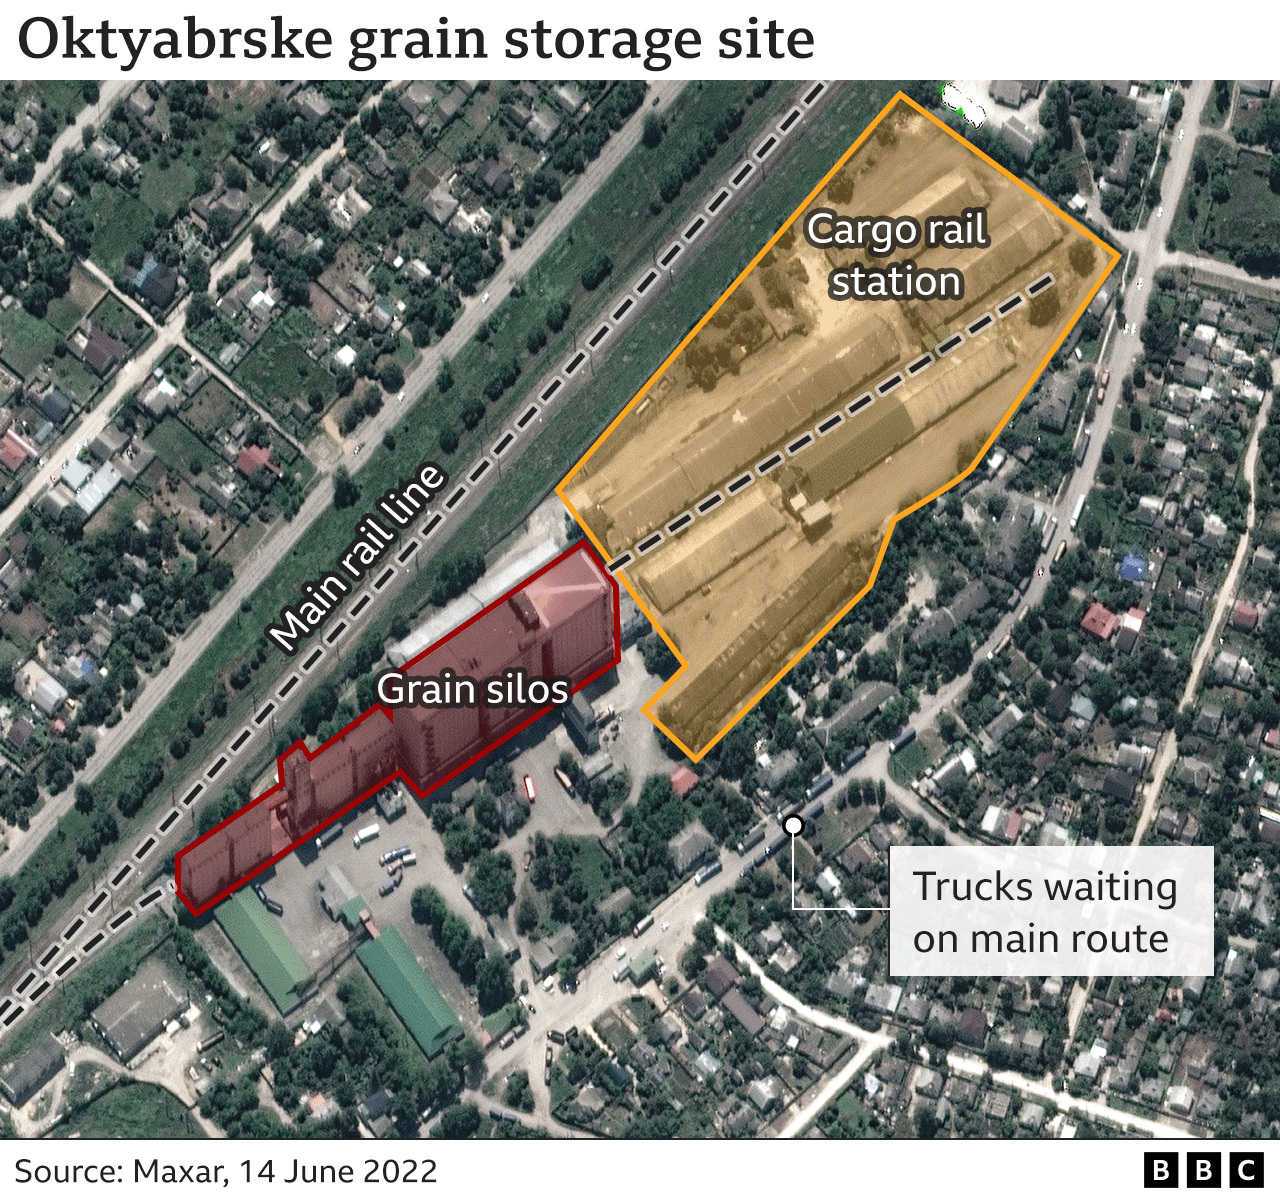 Visual analysis of Oktyabrske grain storage site